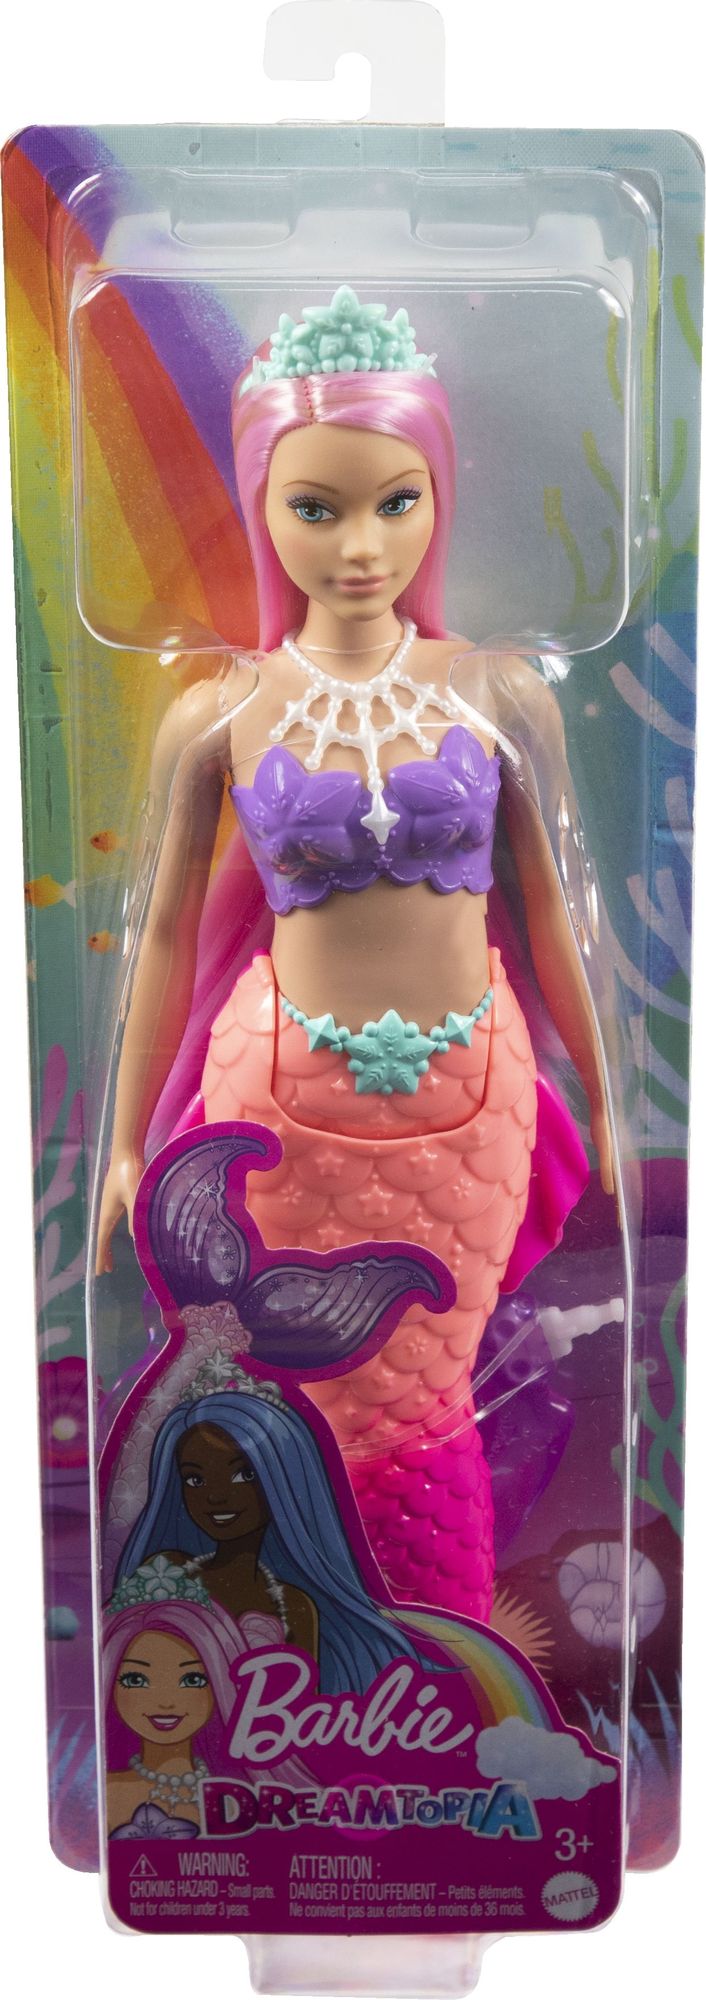 Barbie - Barbie Dreamtopia Meerjungfrau-Puppe' kaufen - Spielwaren